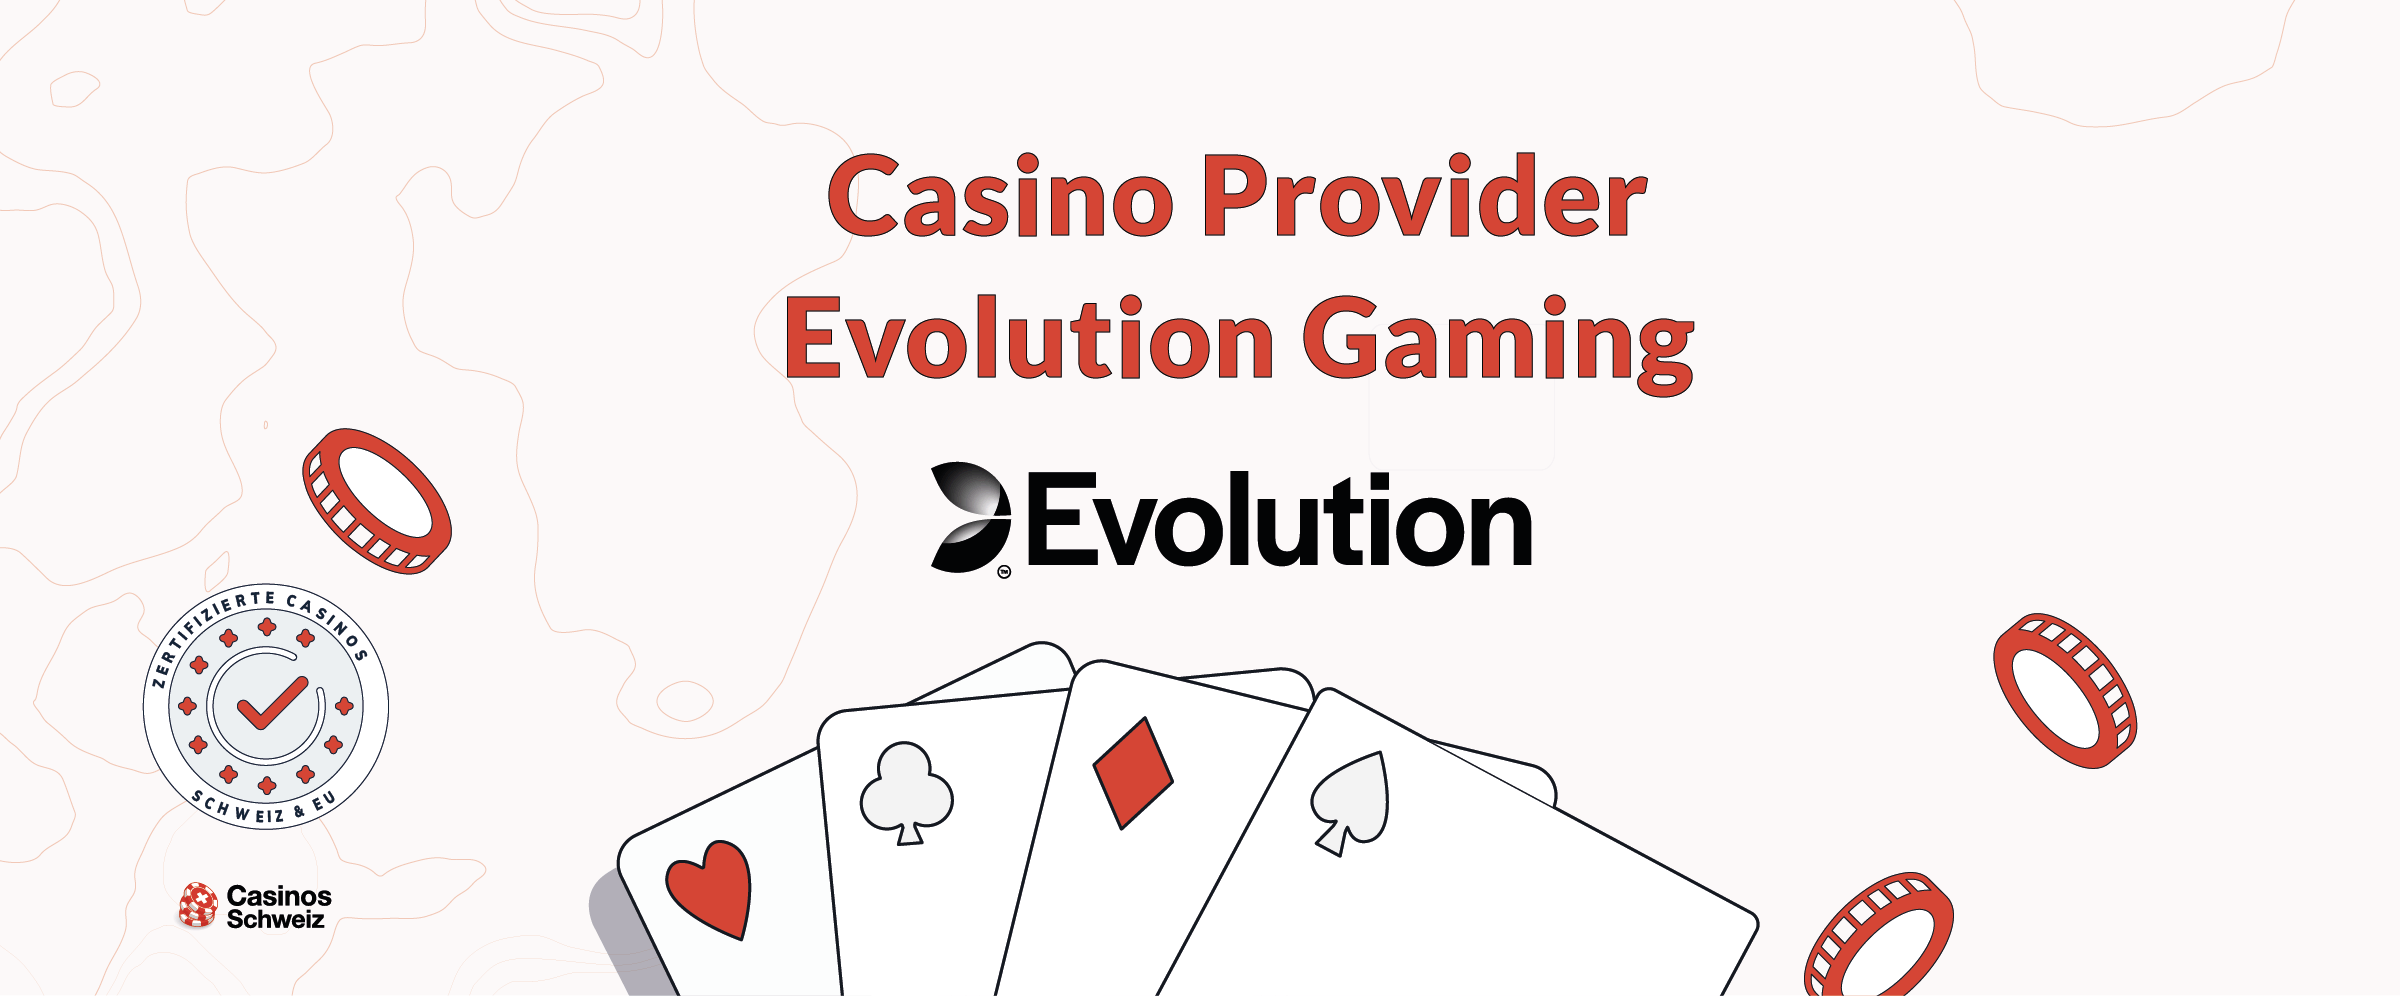 Casino Provider Evolution Gaming 